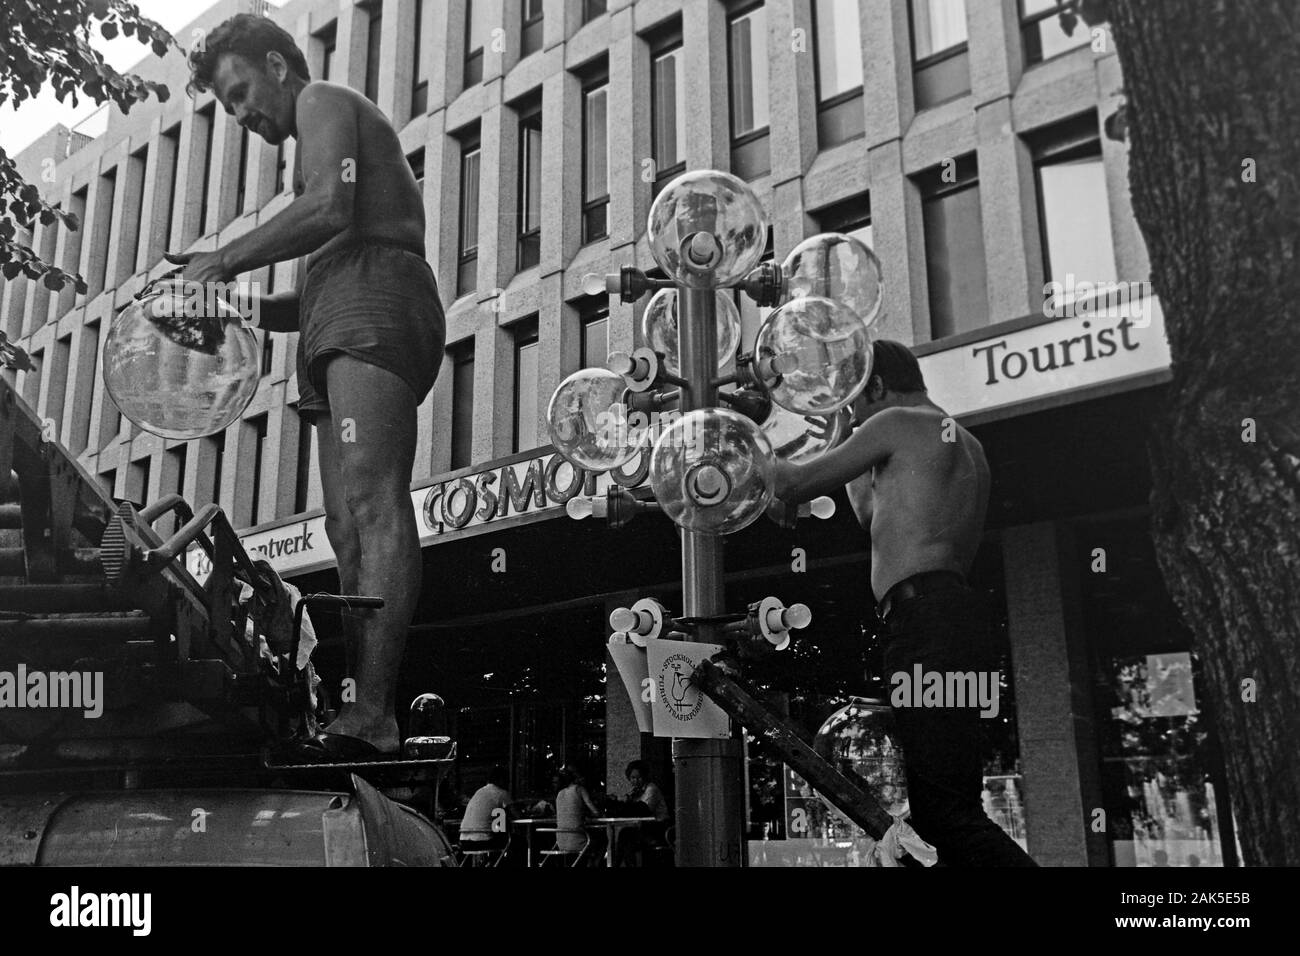 Lampenputzer bei der Arbeit vor dem Sverigehuset in der Hamngatan am Kungsträdgarden, 1969. Lamp cleaners at work in front of Sverigehuset on Hamngatan at Kungsträdgarden, 1969. Stock Photo